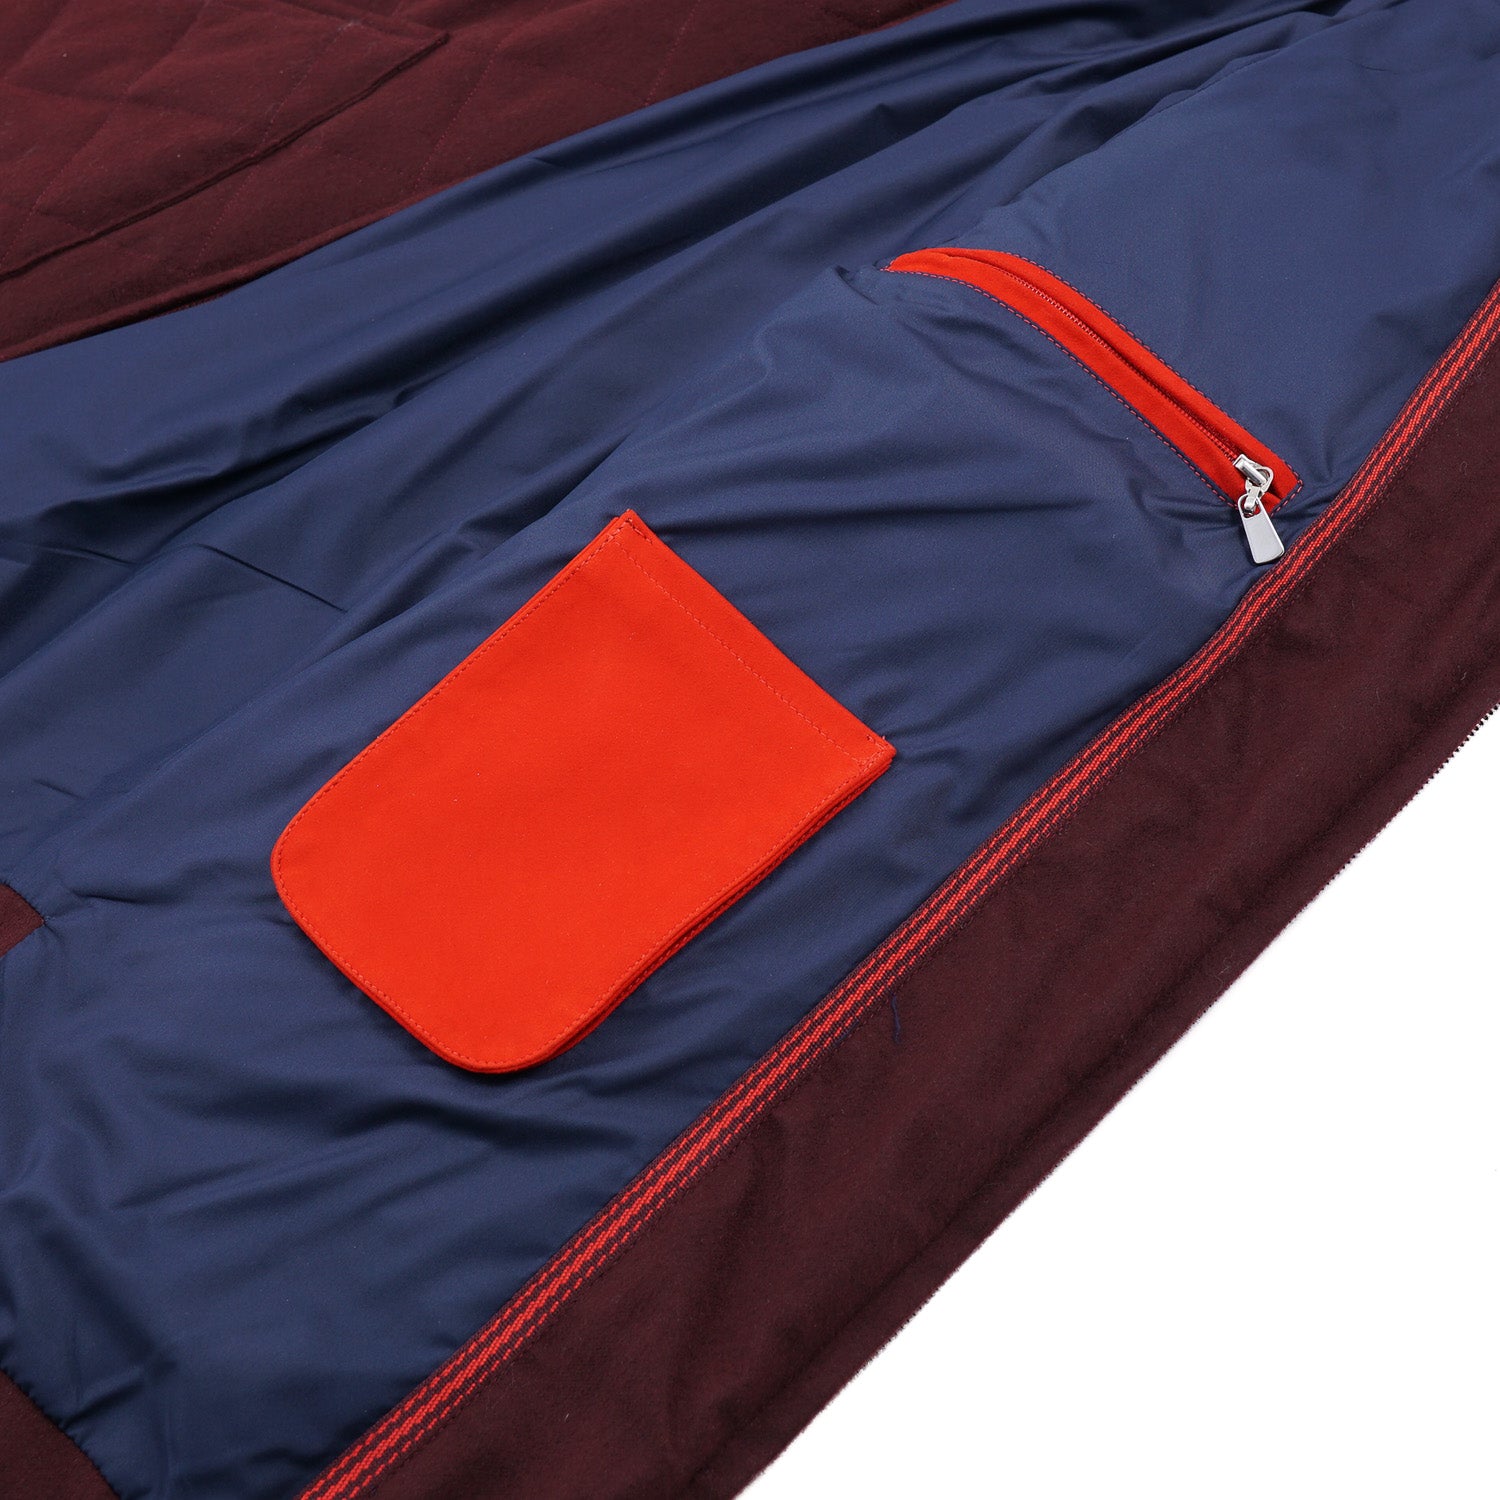 Isaia Quilted Aqua Cashmere Jacket - Top Shelf Apparel